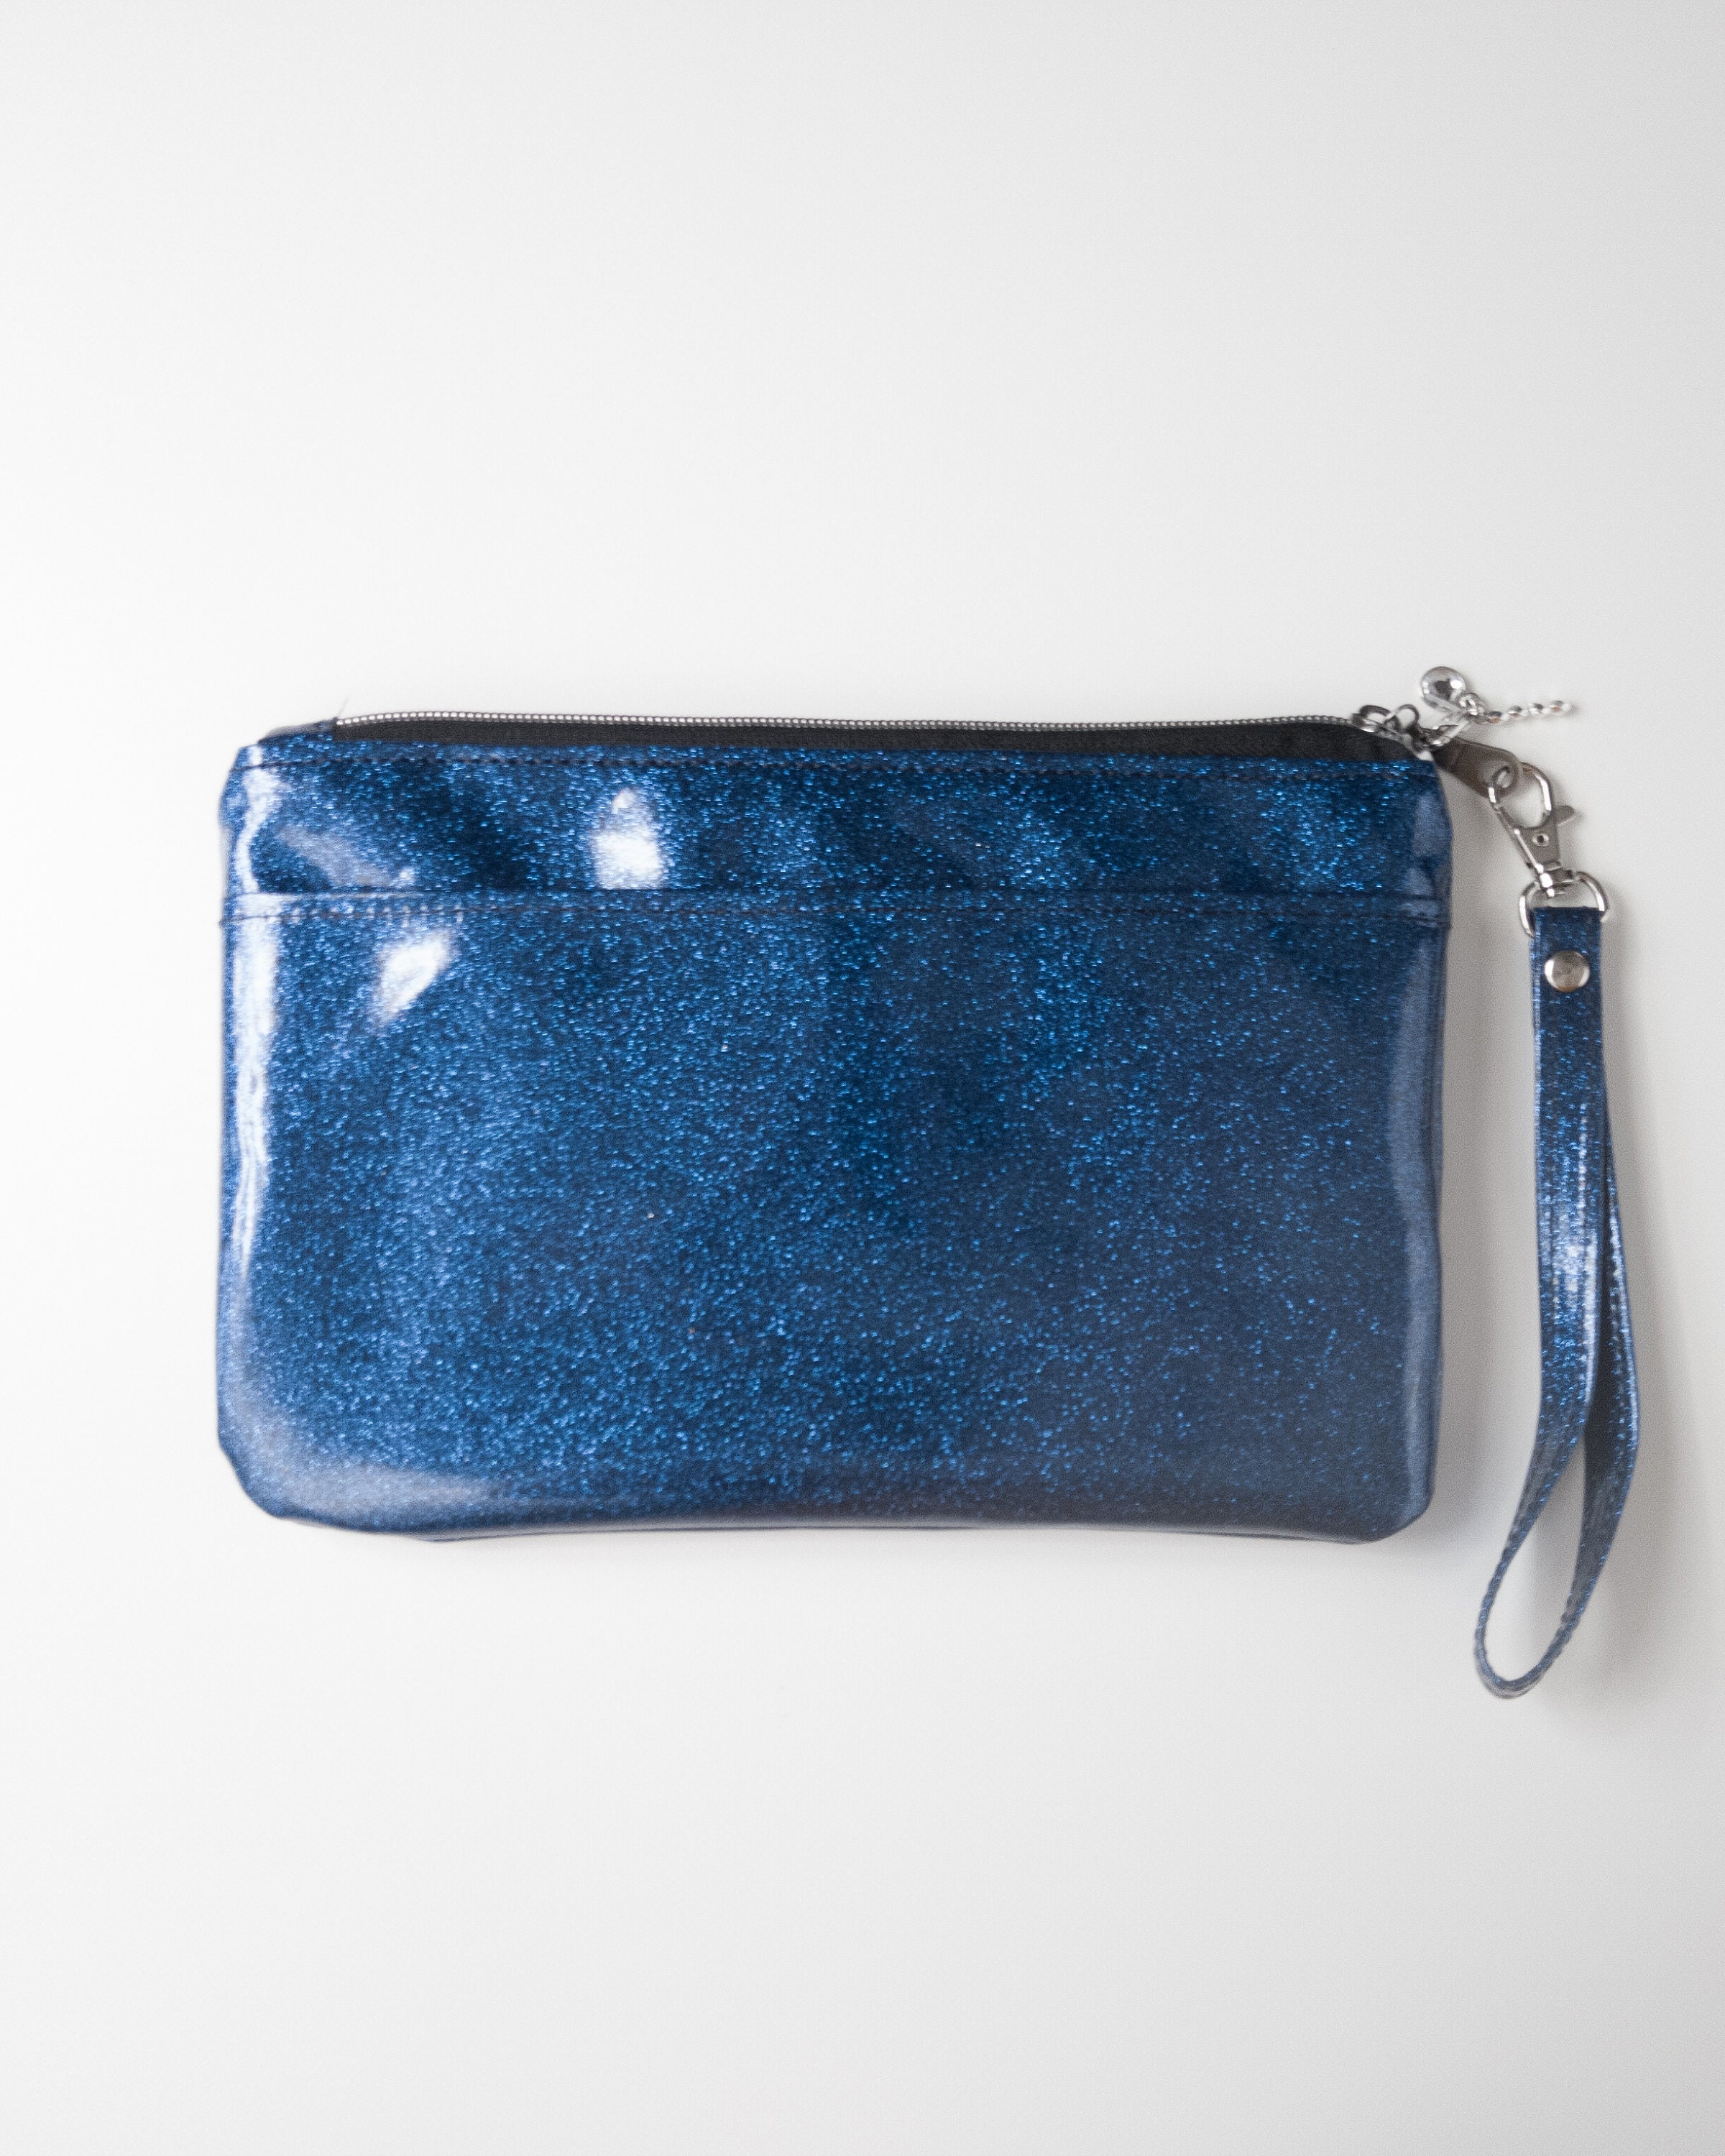 Wristlet Clutch Zippered Pouch Blue Sparkle Wristlet Bag | Etsy